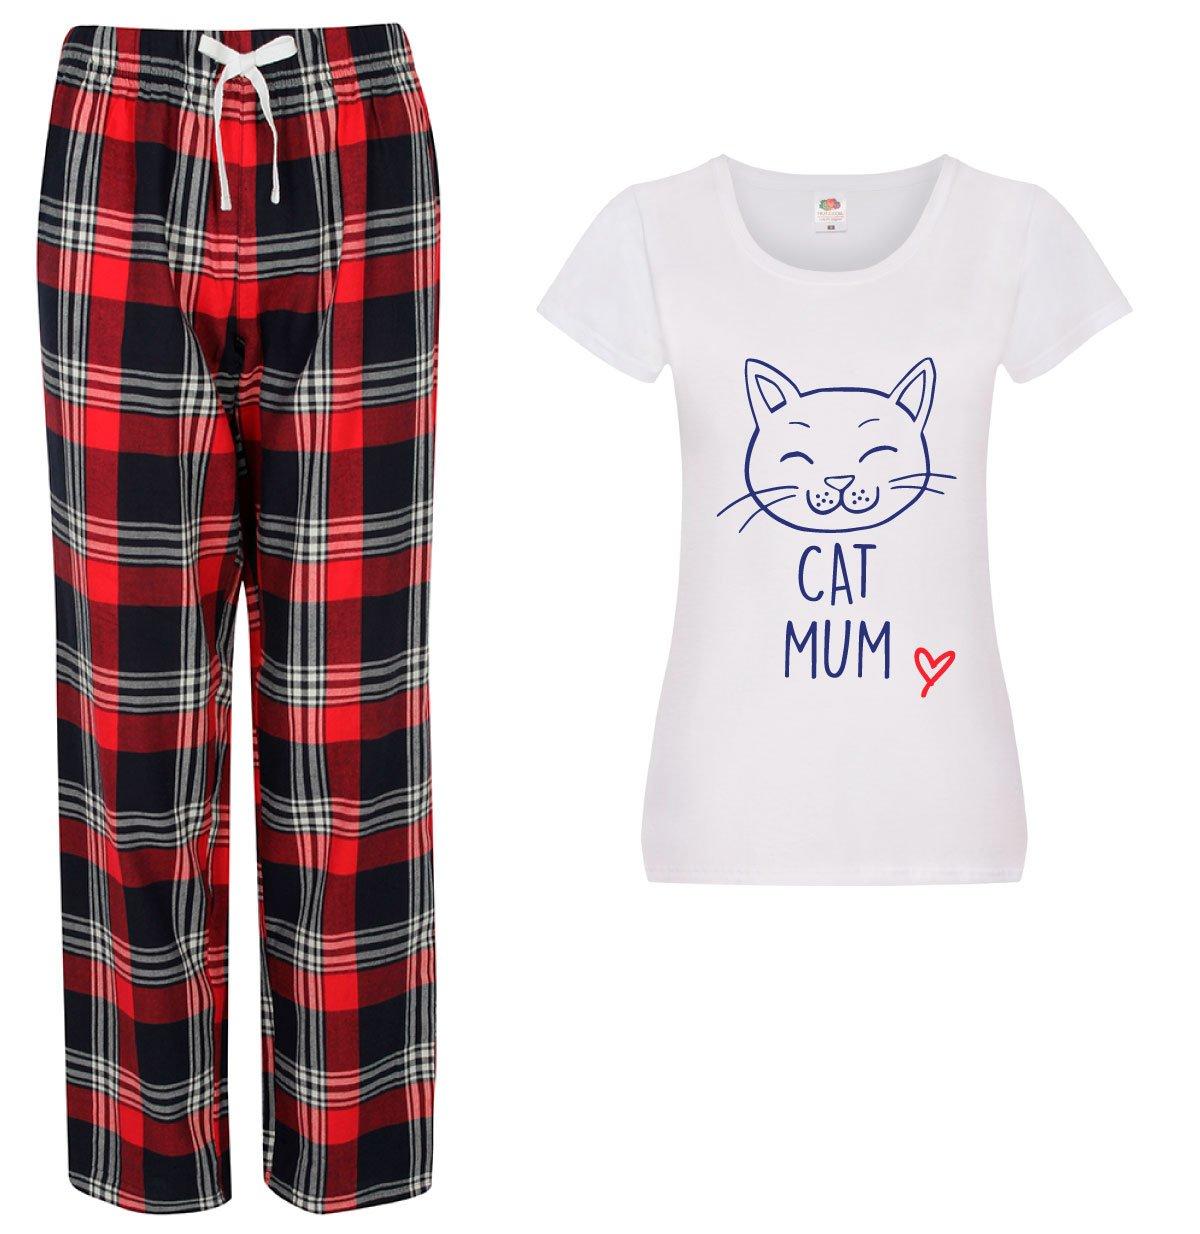 Cat Mum Pyjamas Ladies Tartan Trouser Bottoms Pyjama